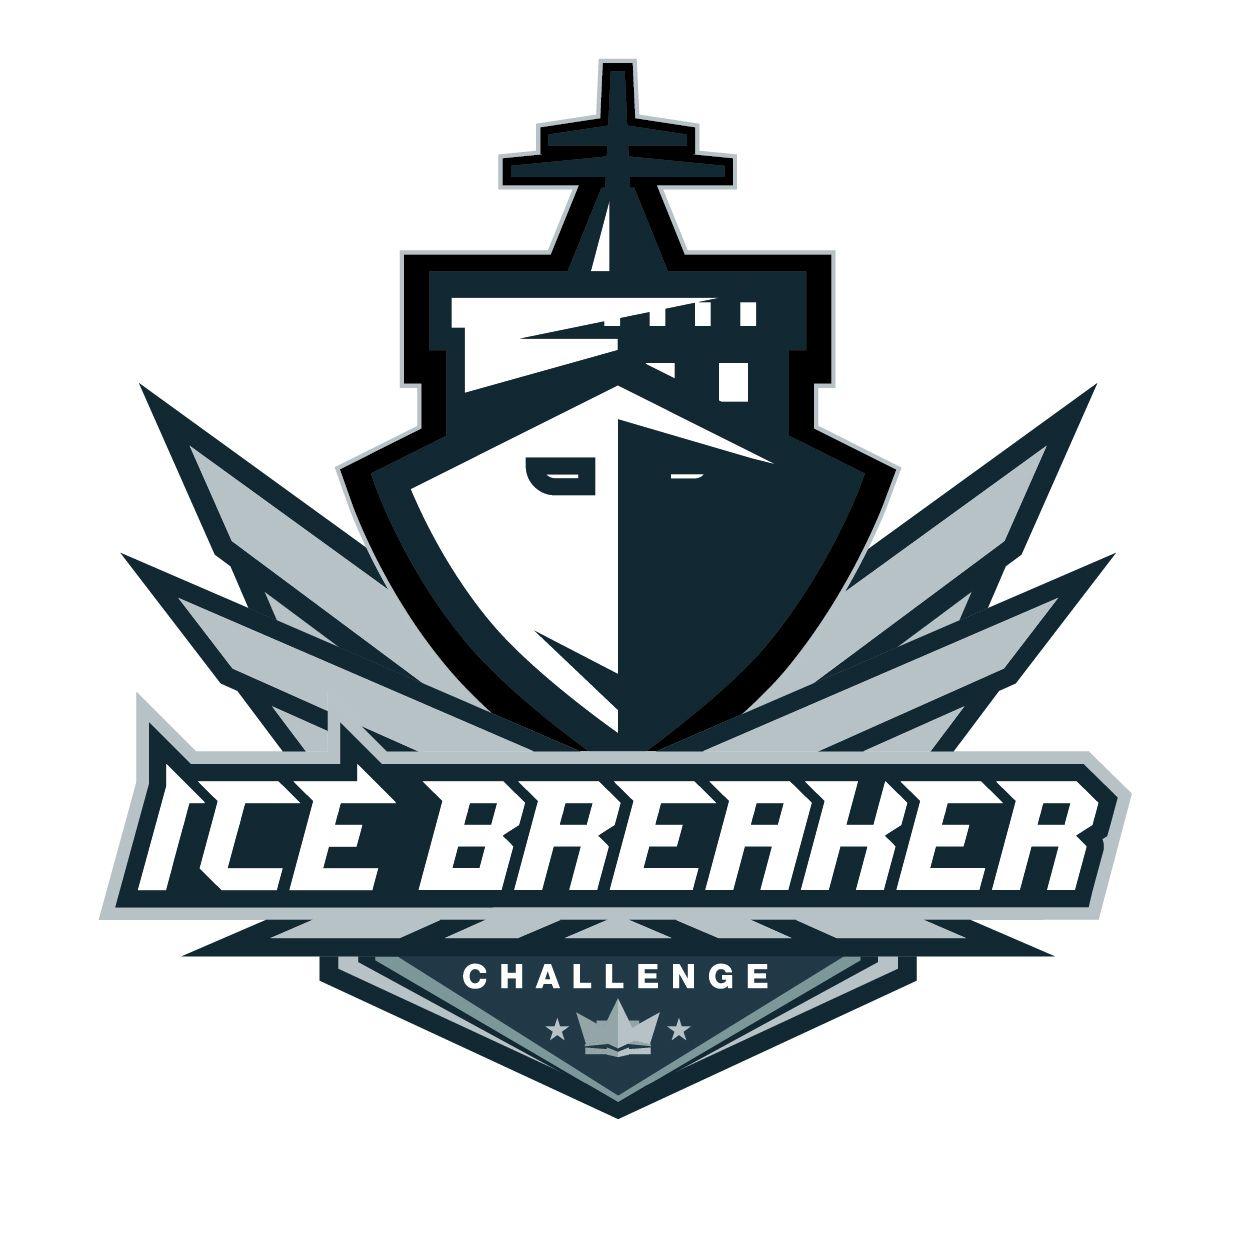 Icebreaker Logo - Icebreaker Logos